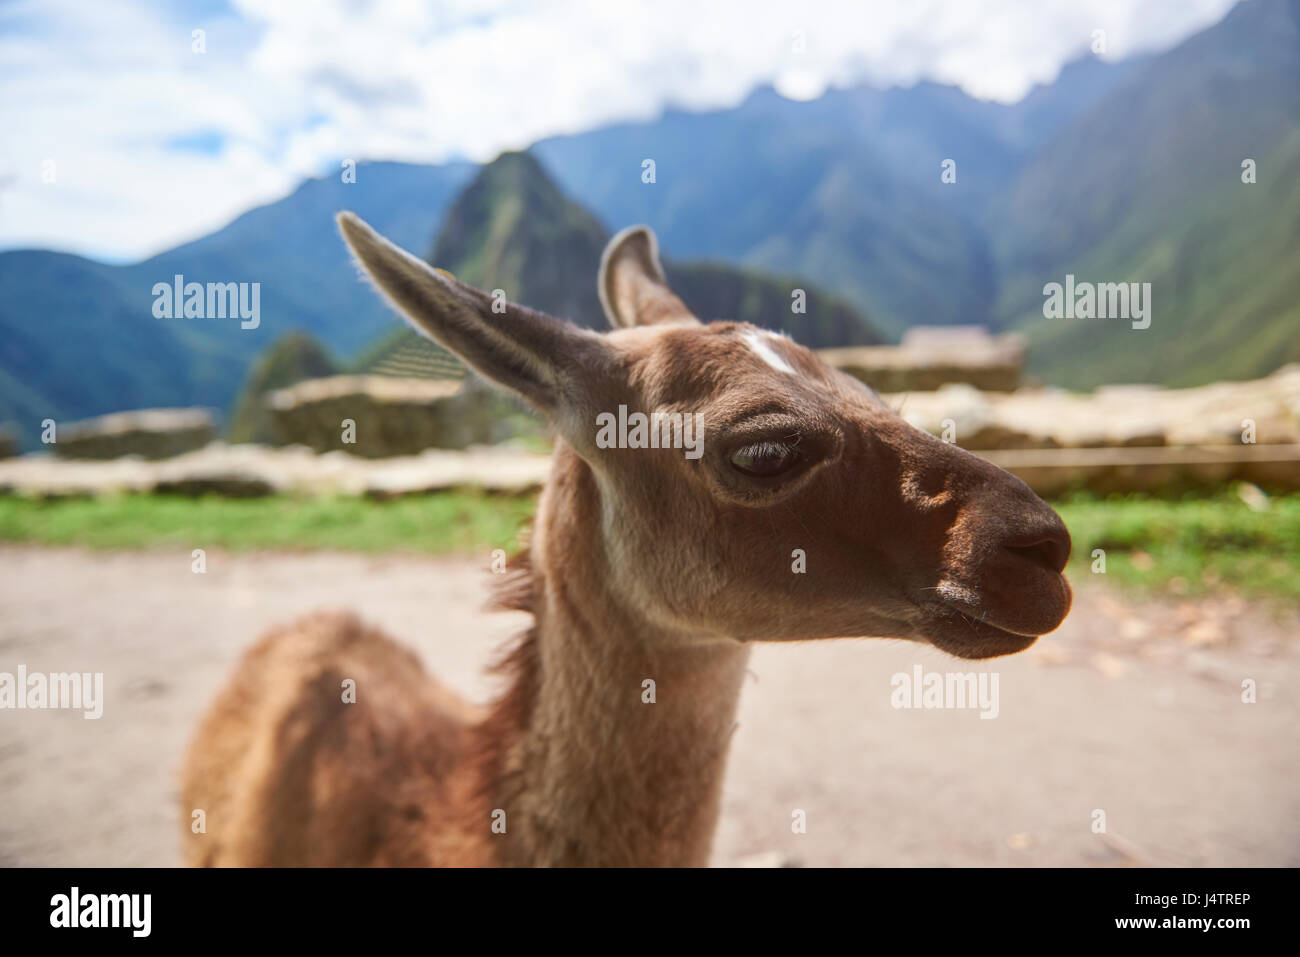 Cute brown baby lama in Machu Picchu city. Alpaca animal close-up Stock Photo